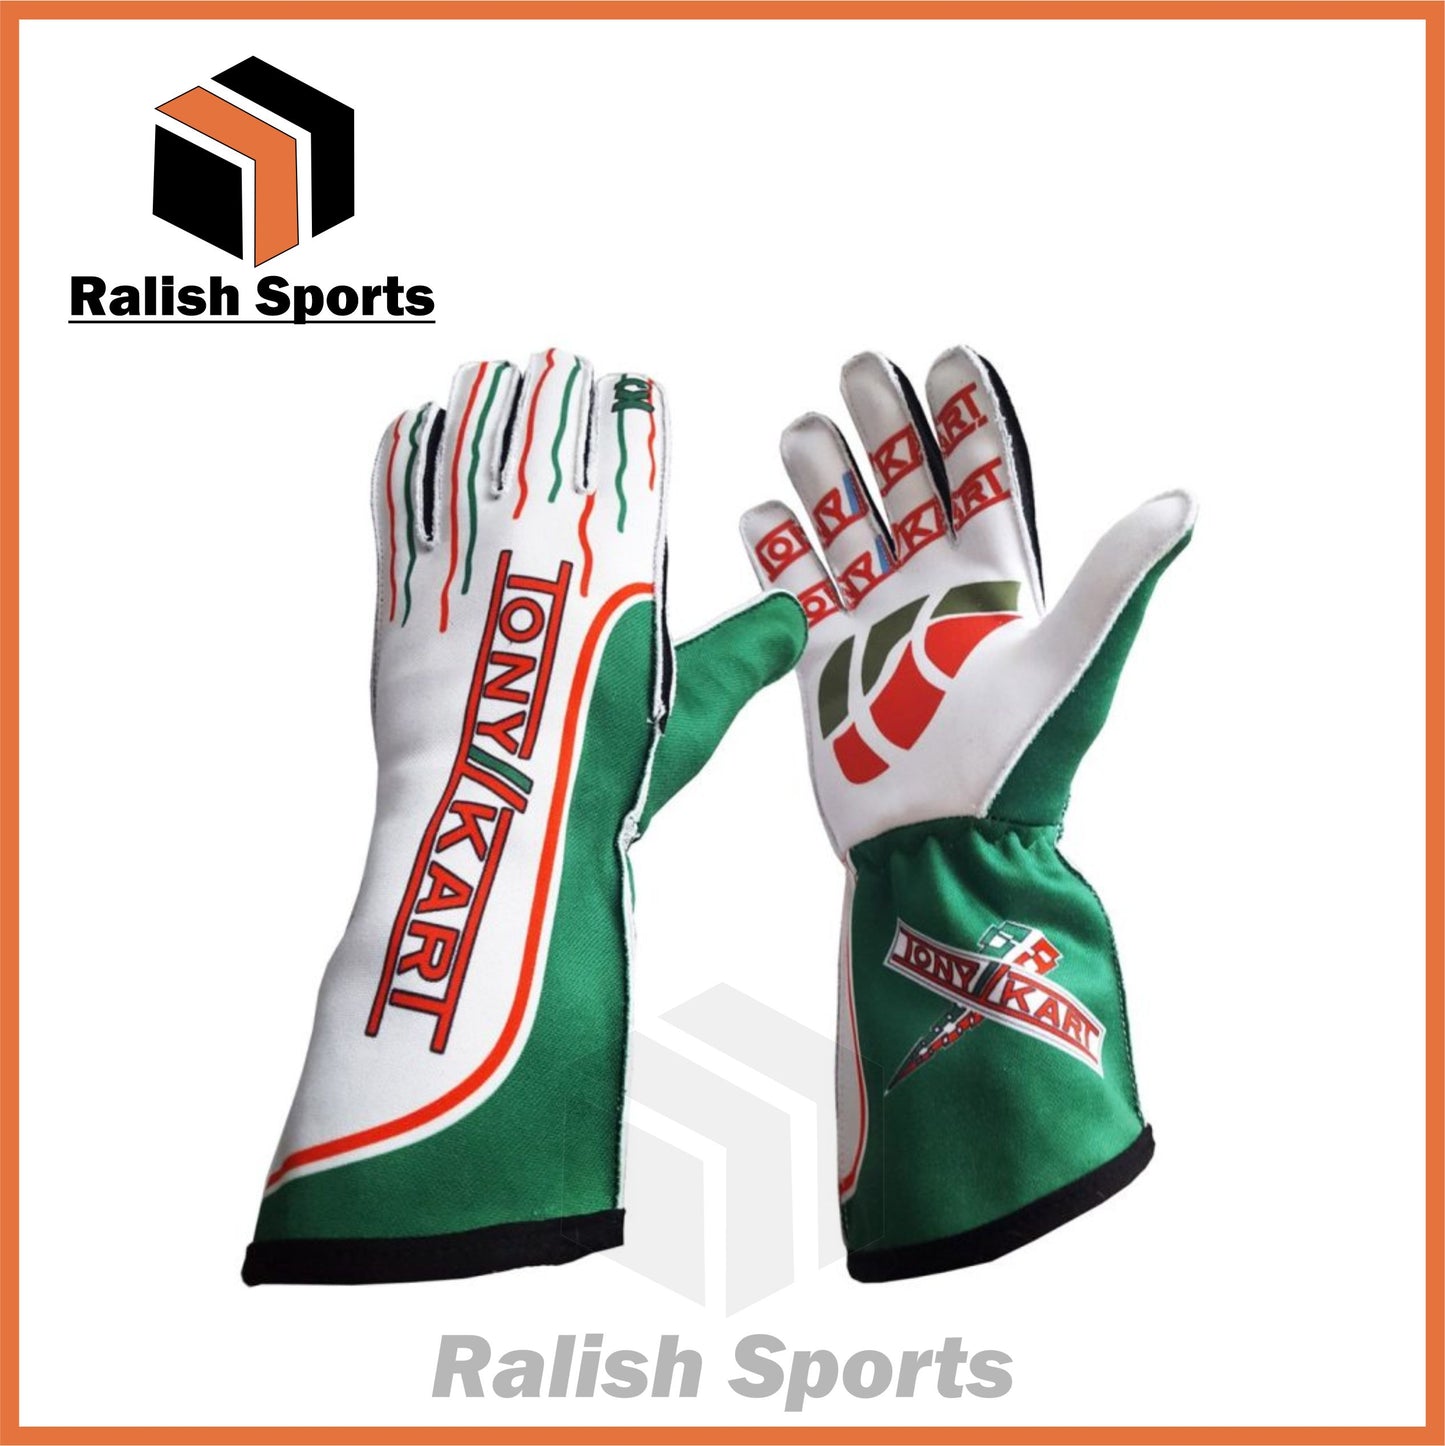 Go Kart Racing Gloves